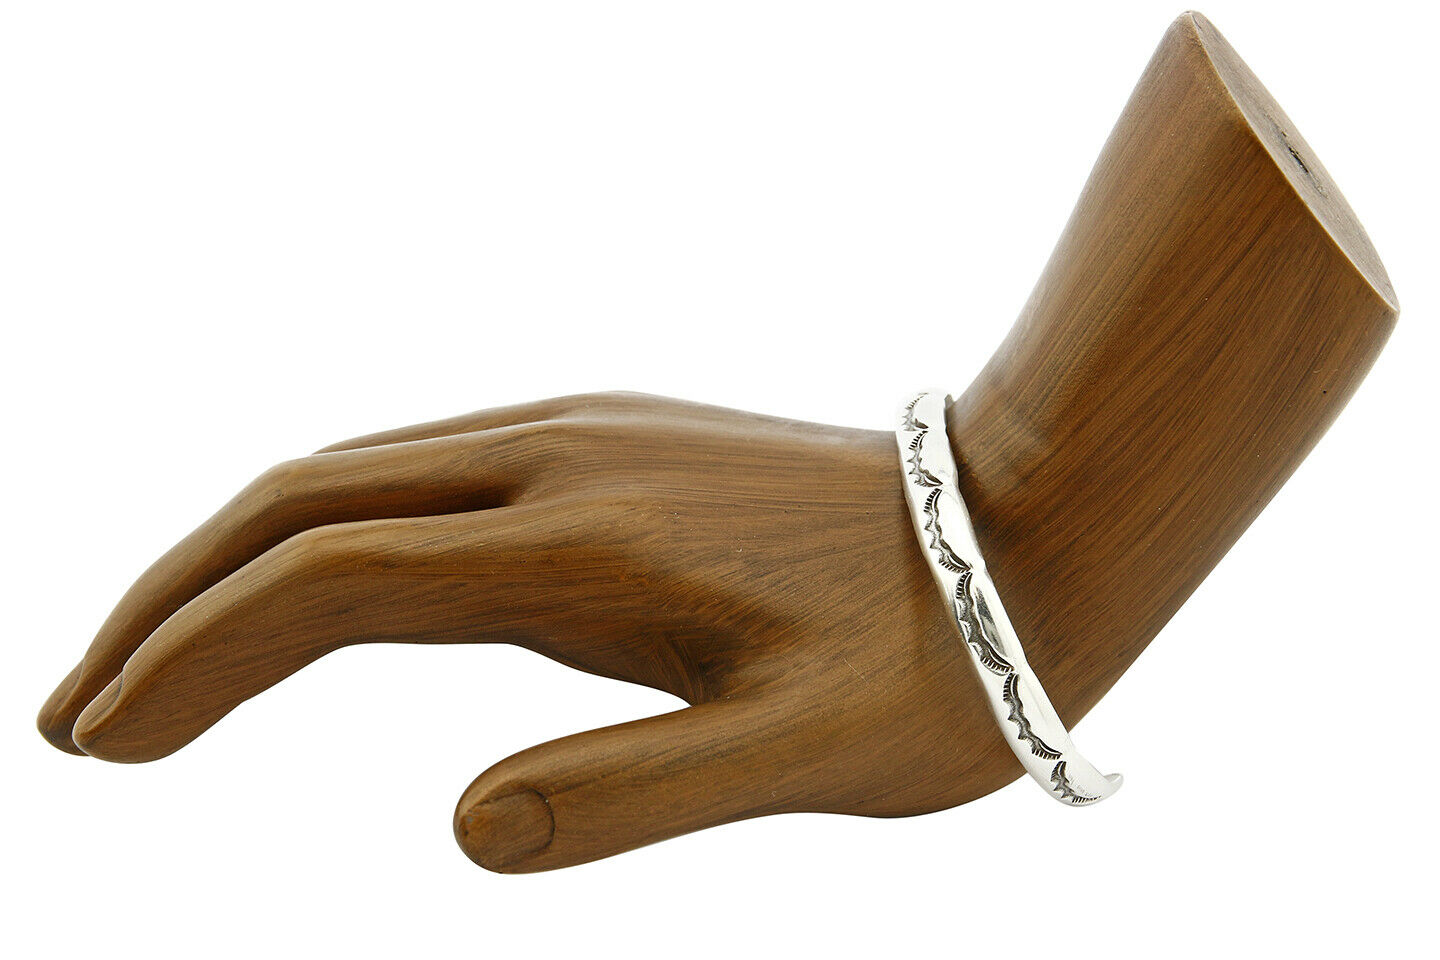 Navajo 6.4 mm Wide 925 Solid Sterling Silver Handmade Hand Stamped Cuff Bracelet